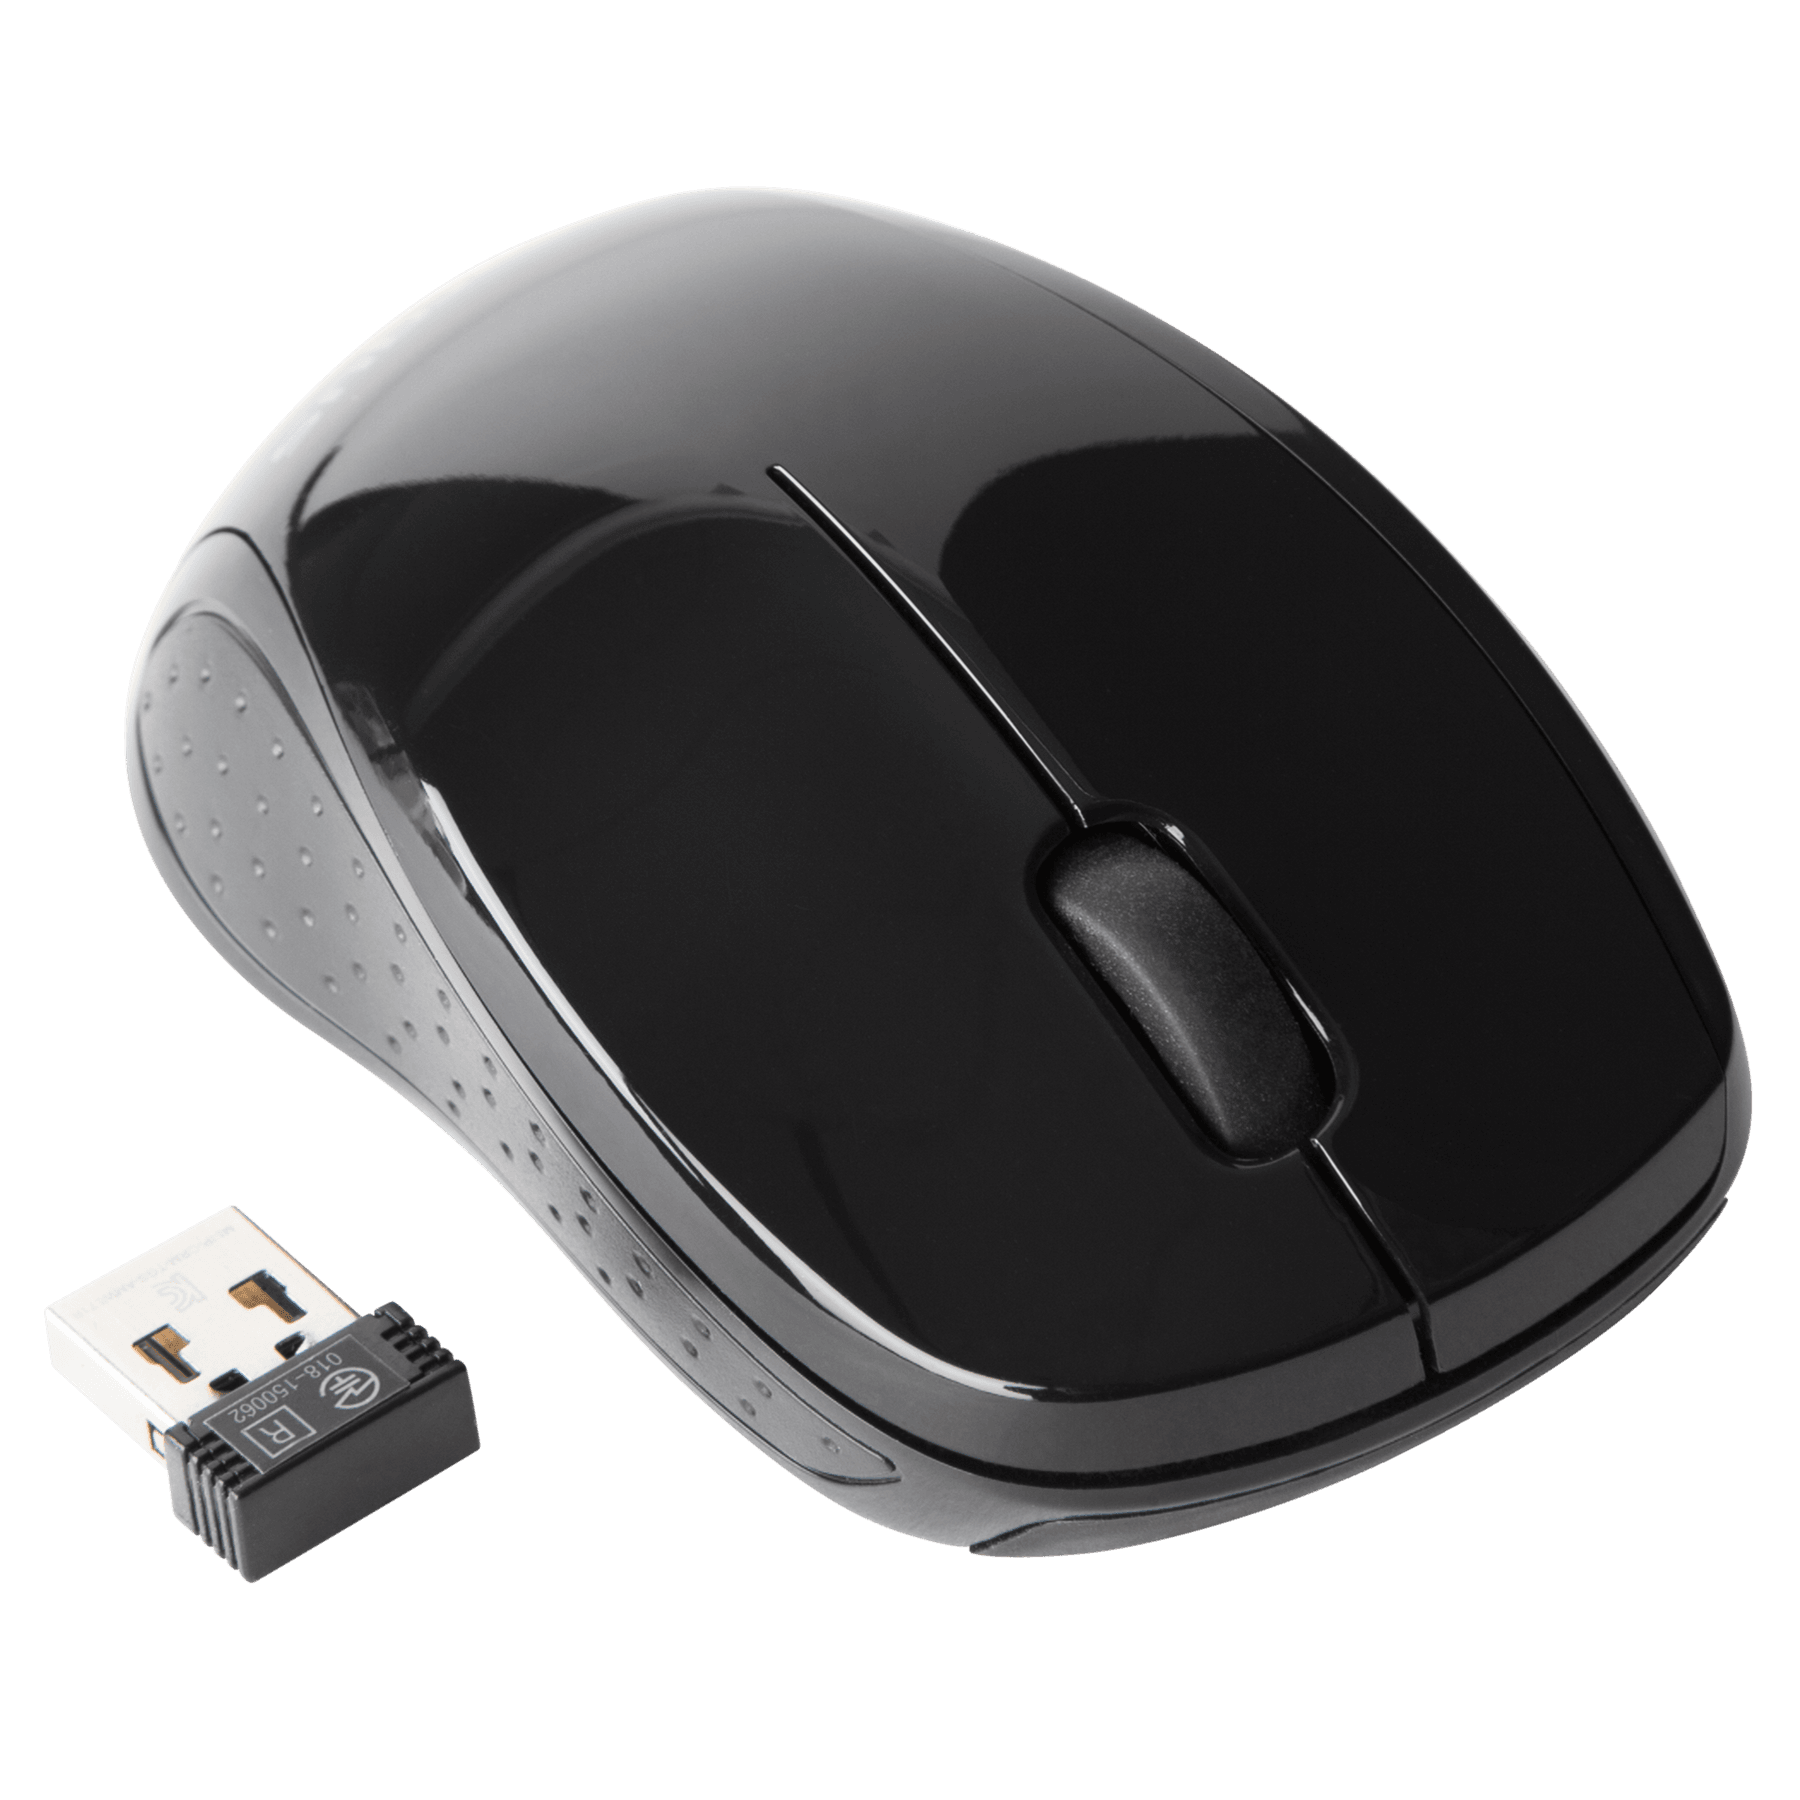 Мышь беспроводная dell Wireless Mouse 220, черный. Мышь Logitech Wireless Mouse m560 White USB. Logitech m175 мышь беспроводная. Мышь Logitech m171 Blue Optical Mouse Wireless (910-004640) USB.